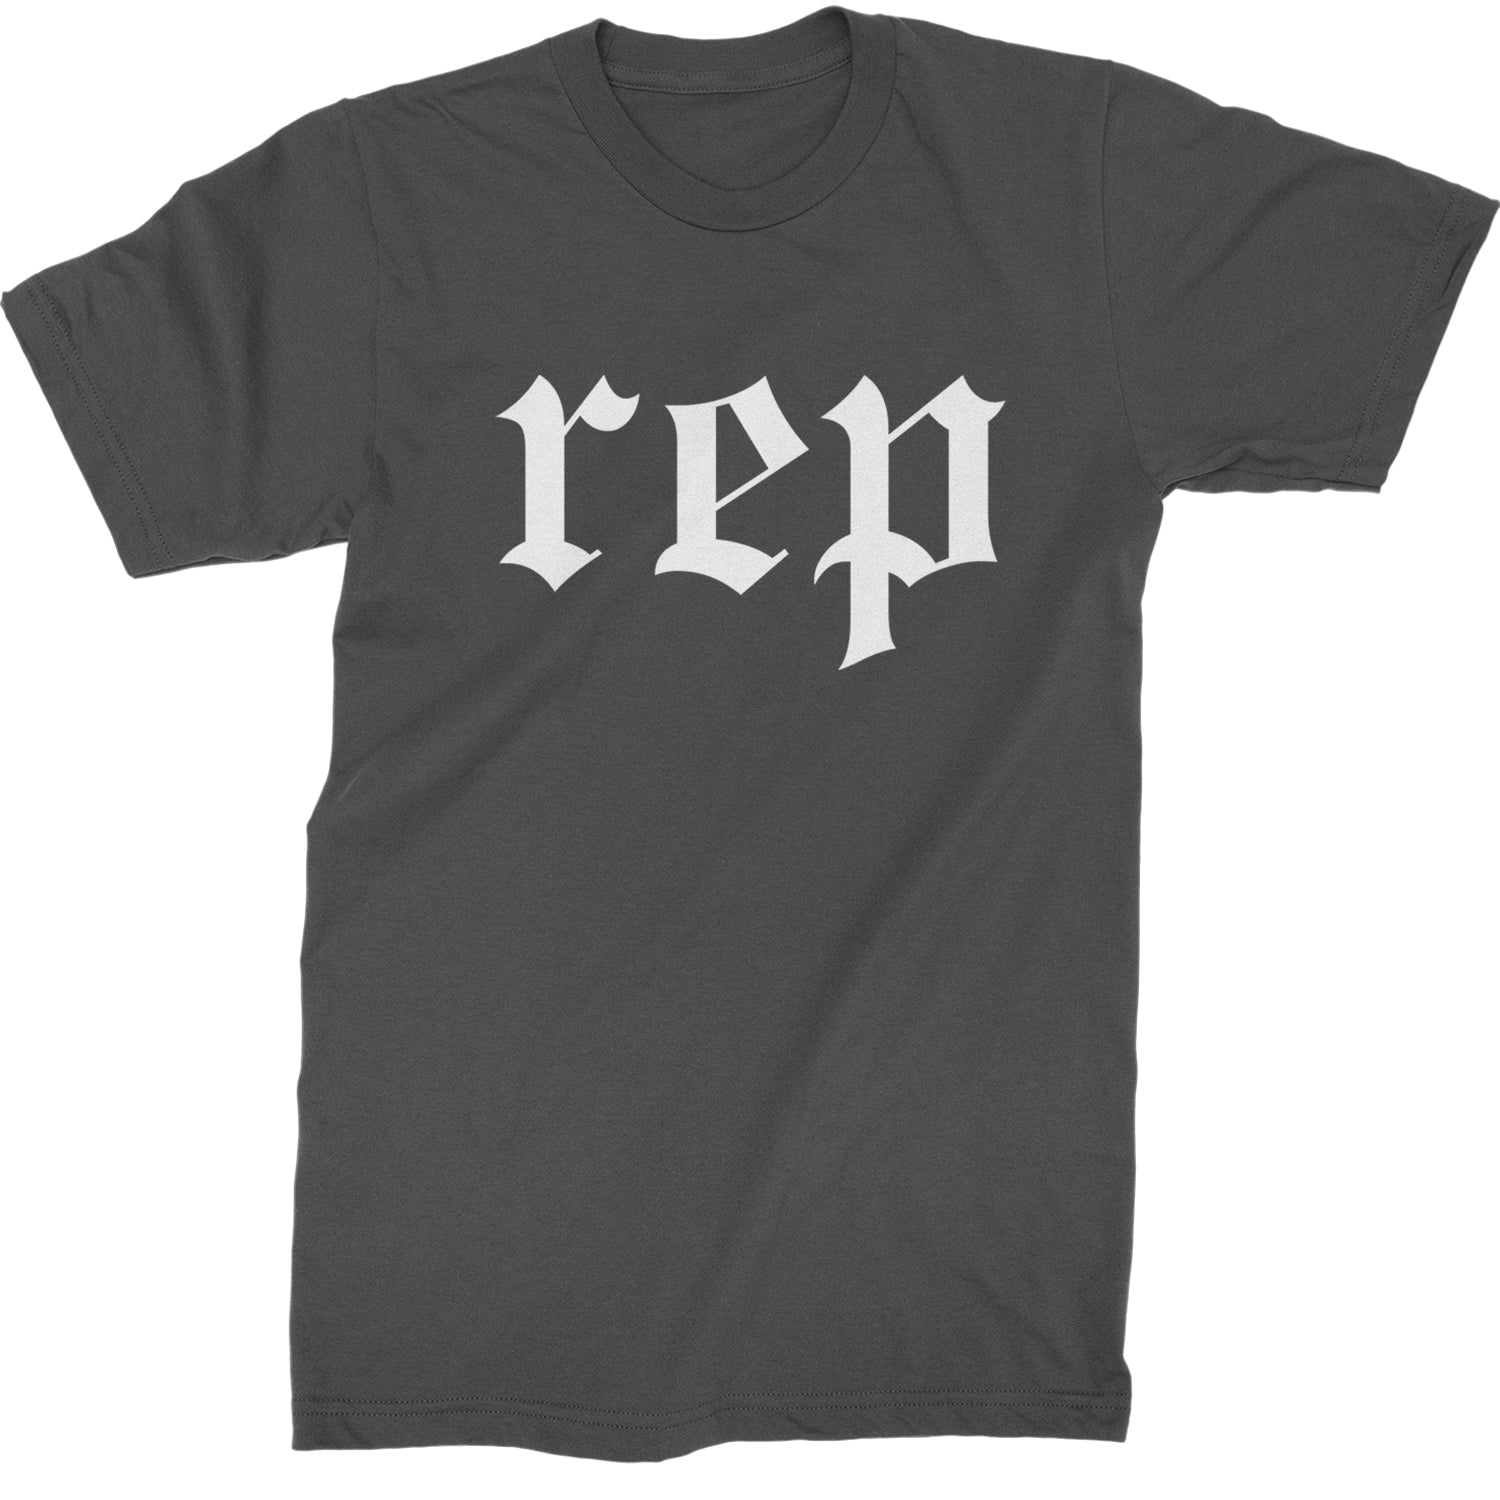 REP Reputation Eras Music Lover Gift Fan Favorite Mens T-shirt Black